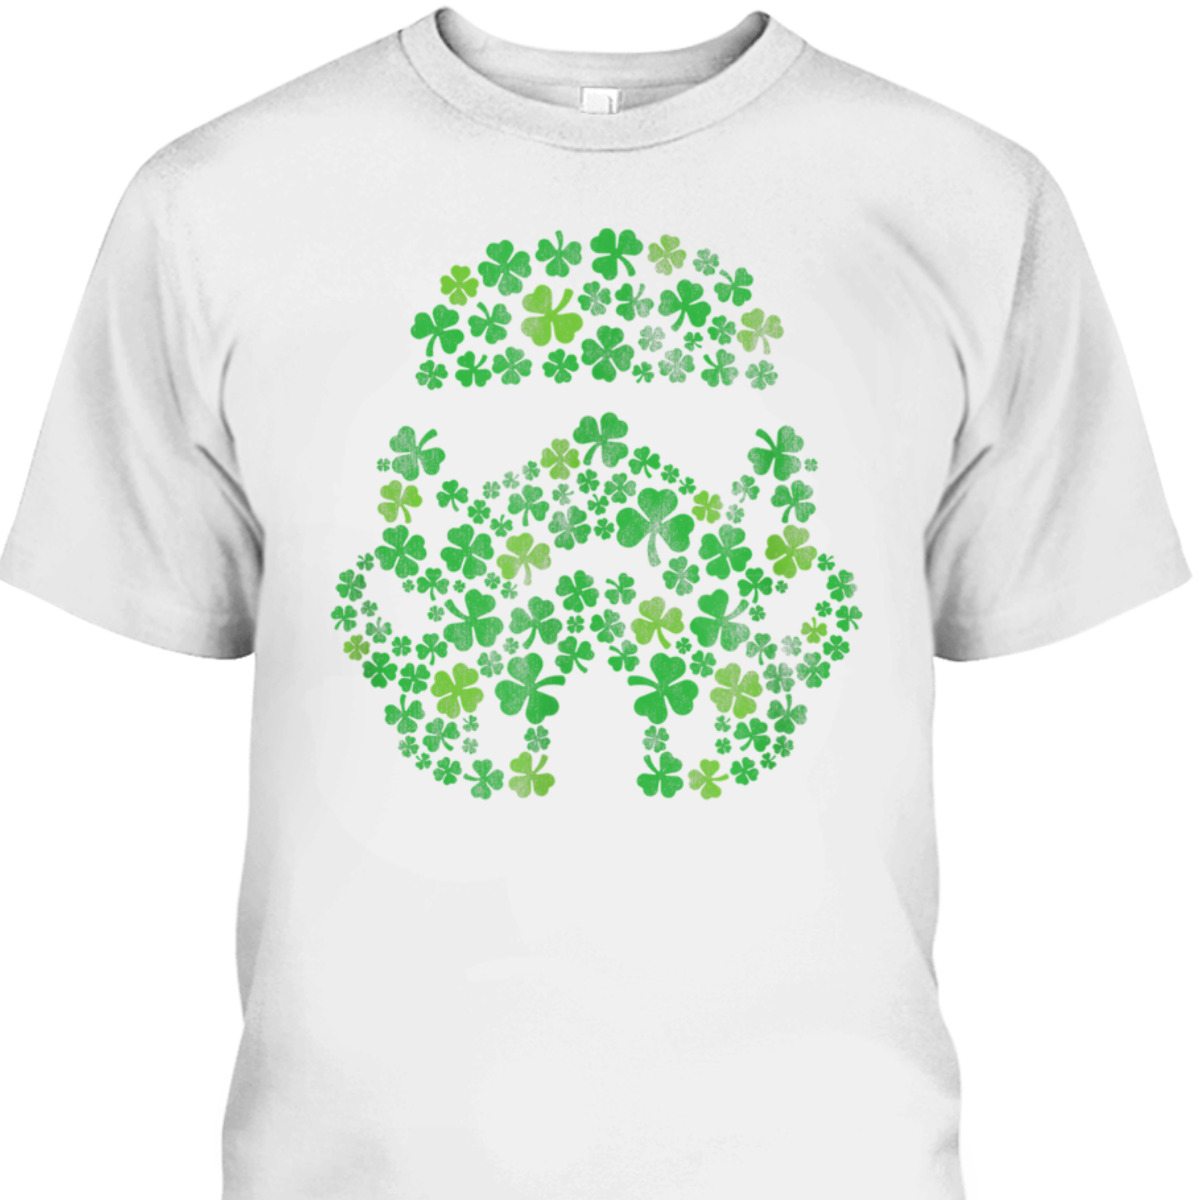 Star Wars Stormtroopers Green Shamrocks St Patrick’s Day T-Shirt